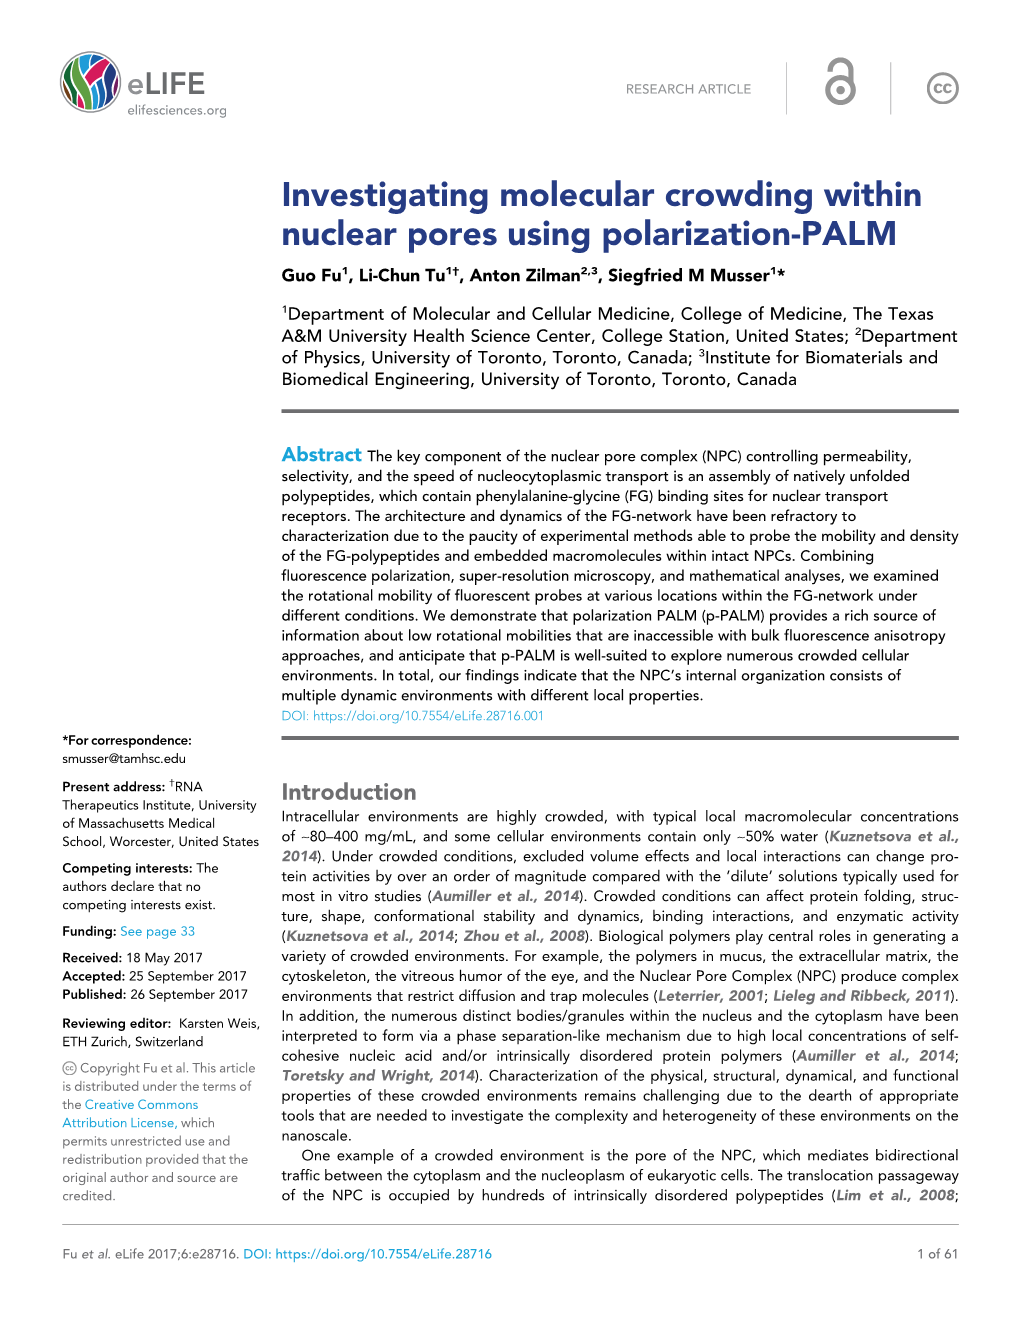 Investigating Molecular Crowding Within Nuclear Pores Using Polarization-PALM Guo Fu1, Li-Chun Tu1†, Anton Zilman2,3, Siegfried M Musser1*